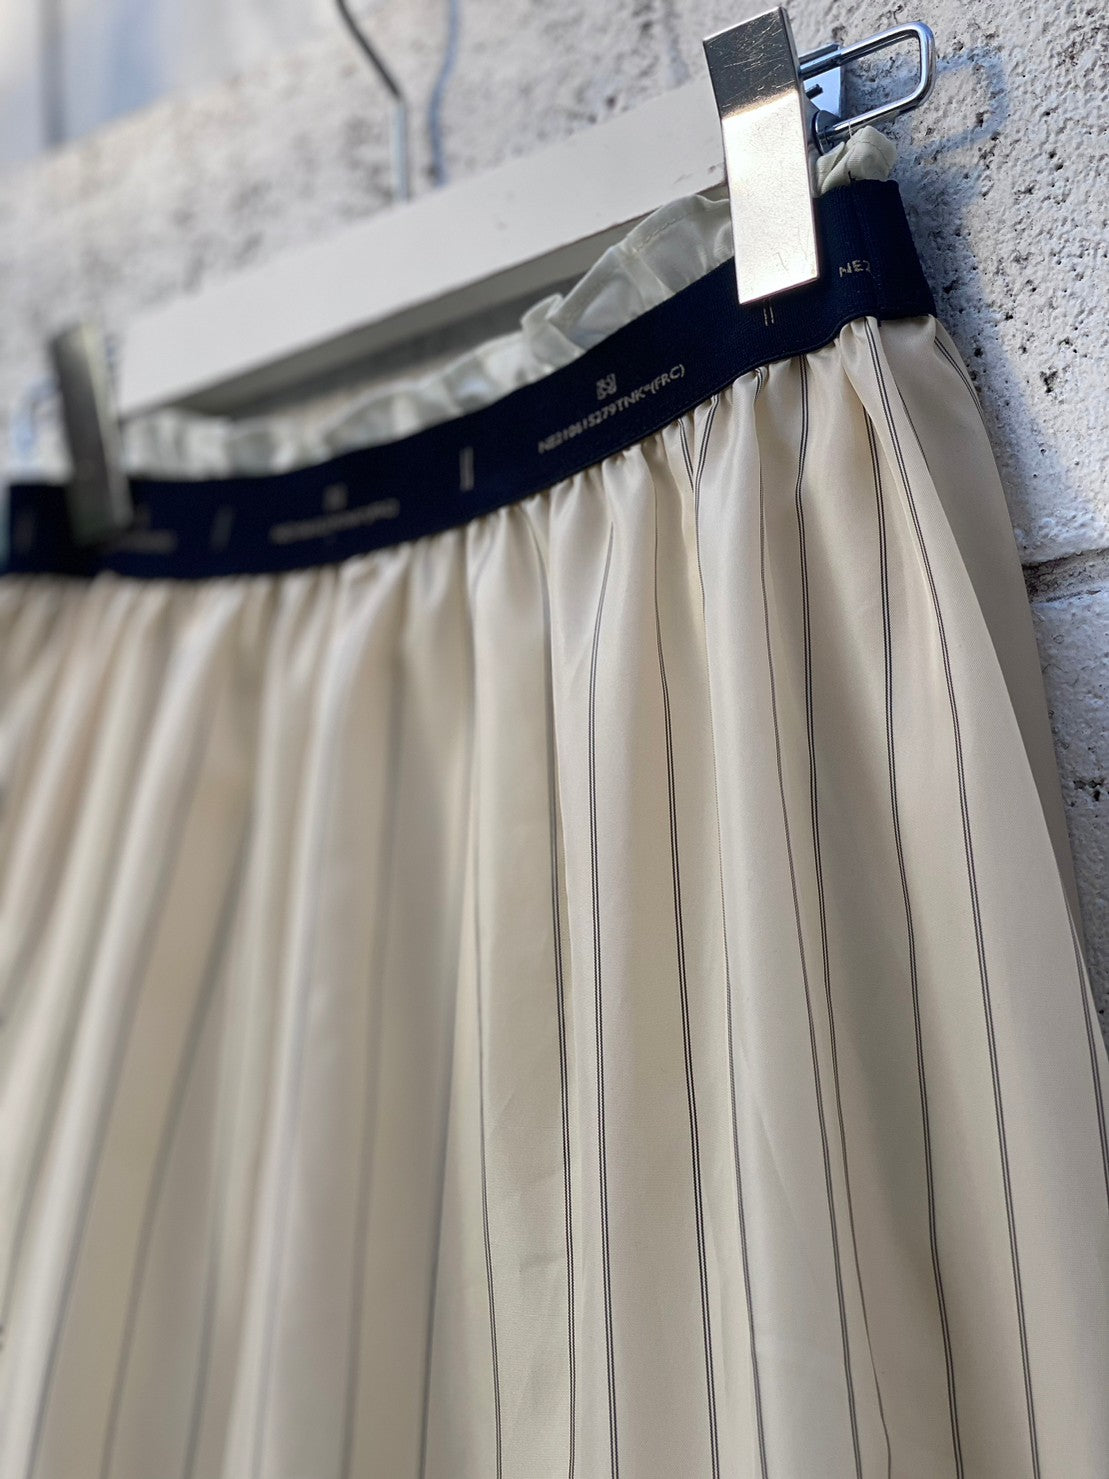 Stripe Taffeta Skirt(Ecru)